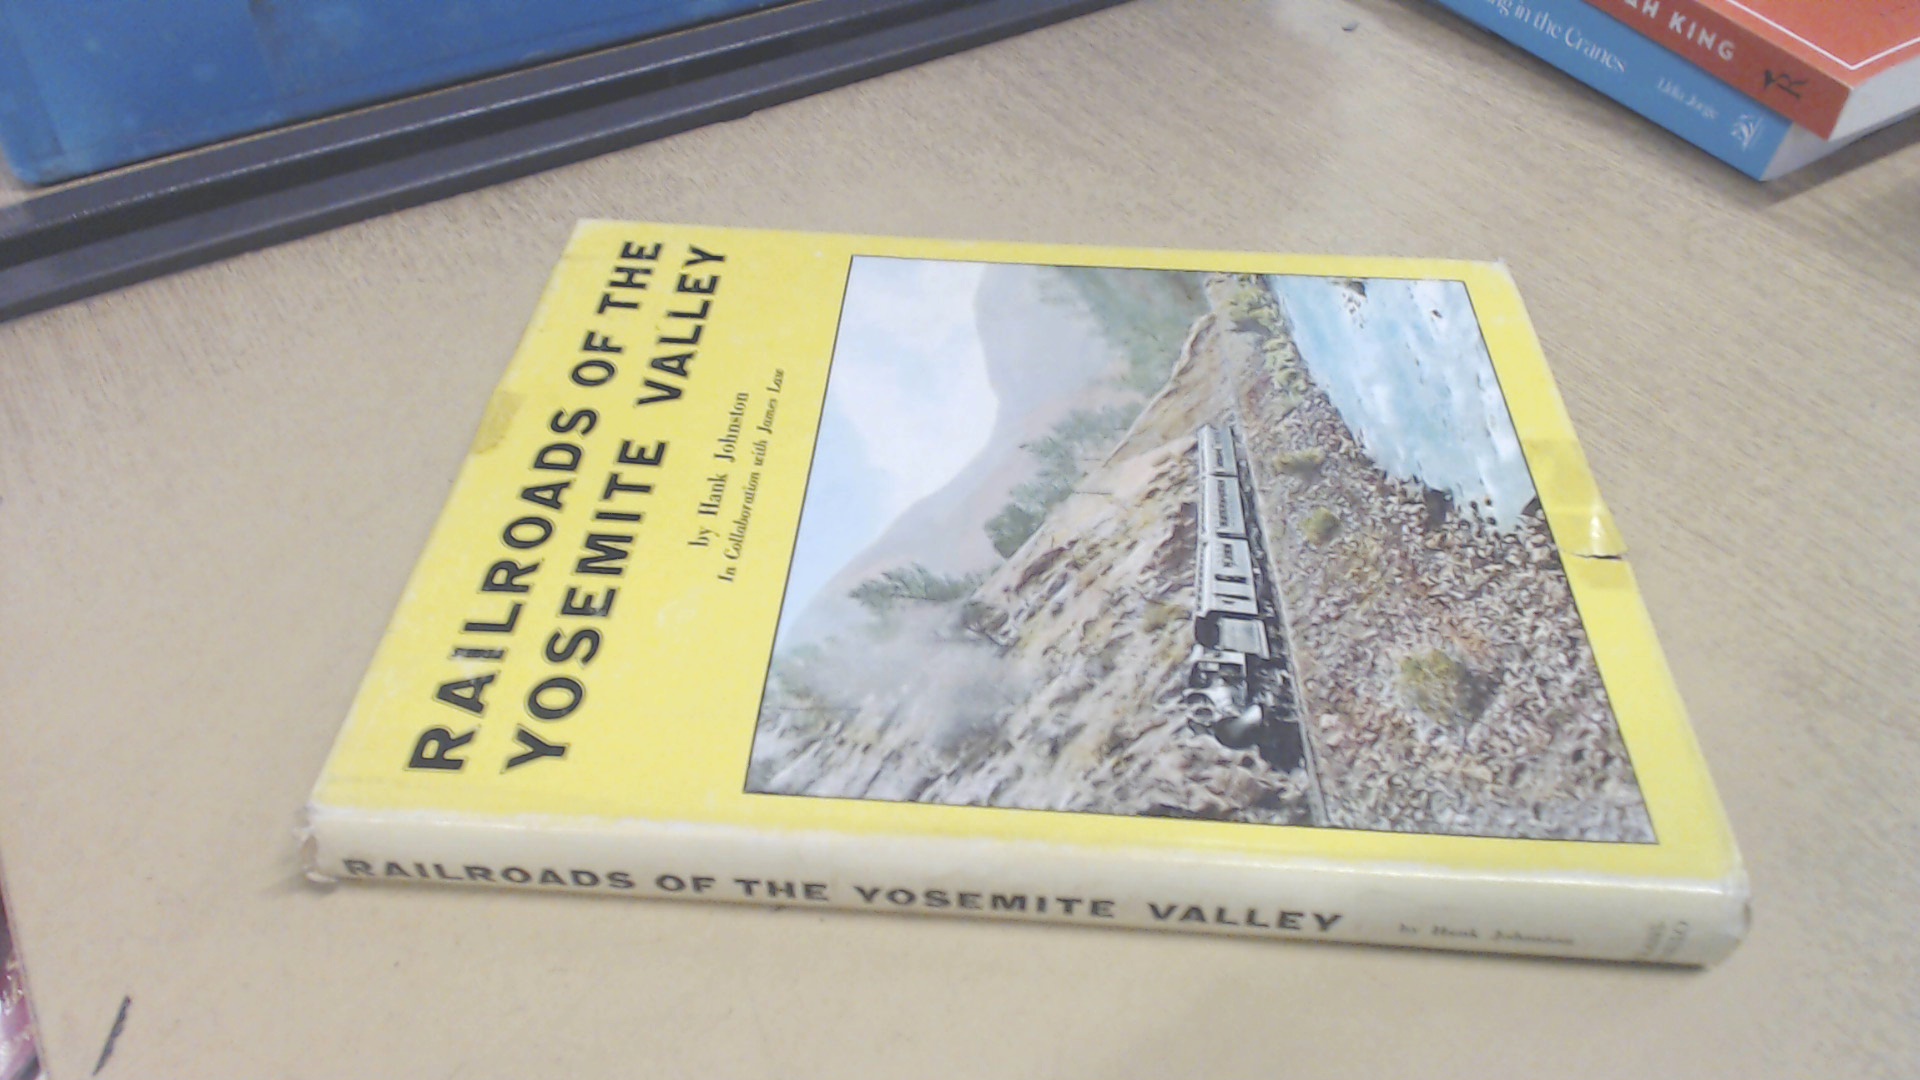 Railroads Of The Yosemite Valley - Hank Johnston